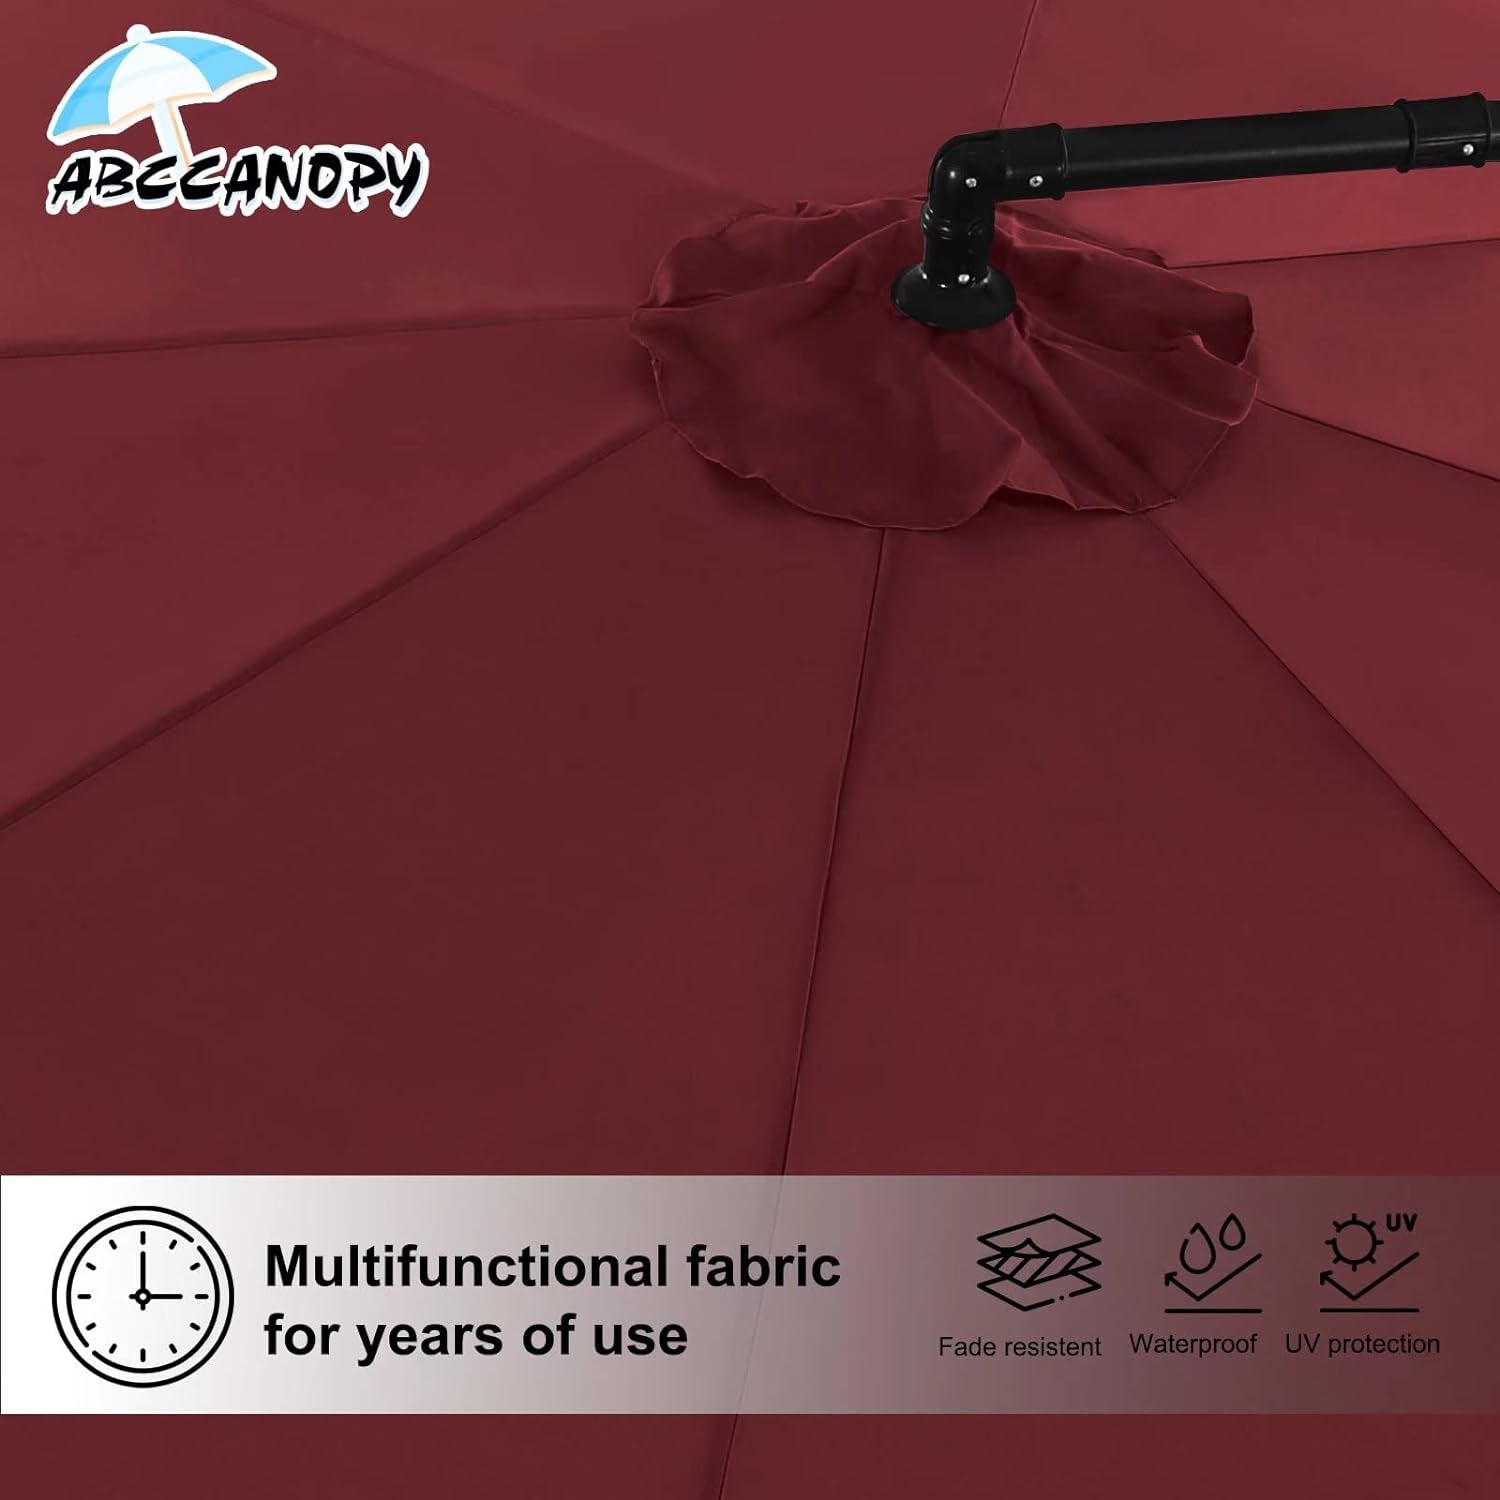 Vivid Burgundy Sunset: 10FT Cantilever Patio Umbrella